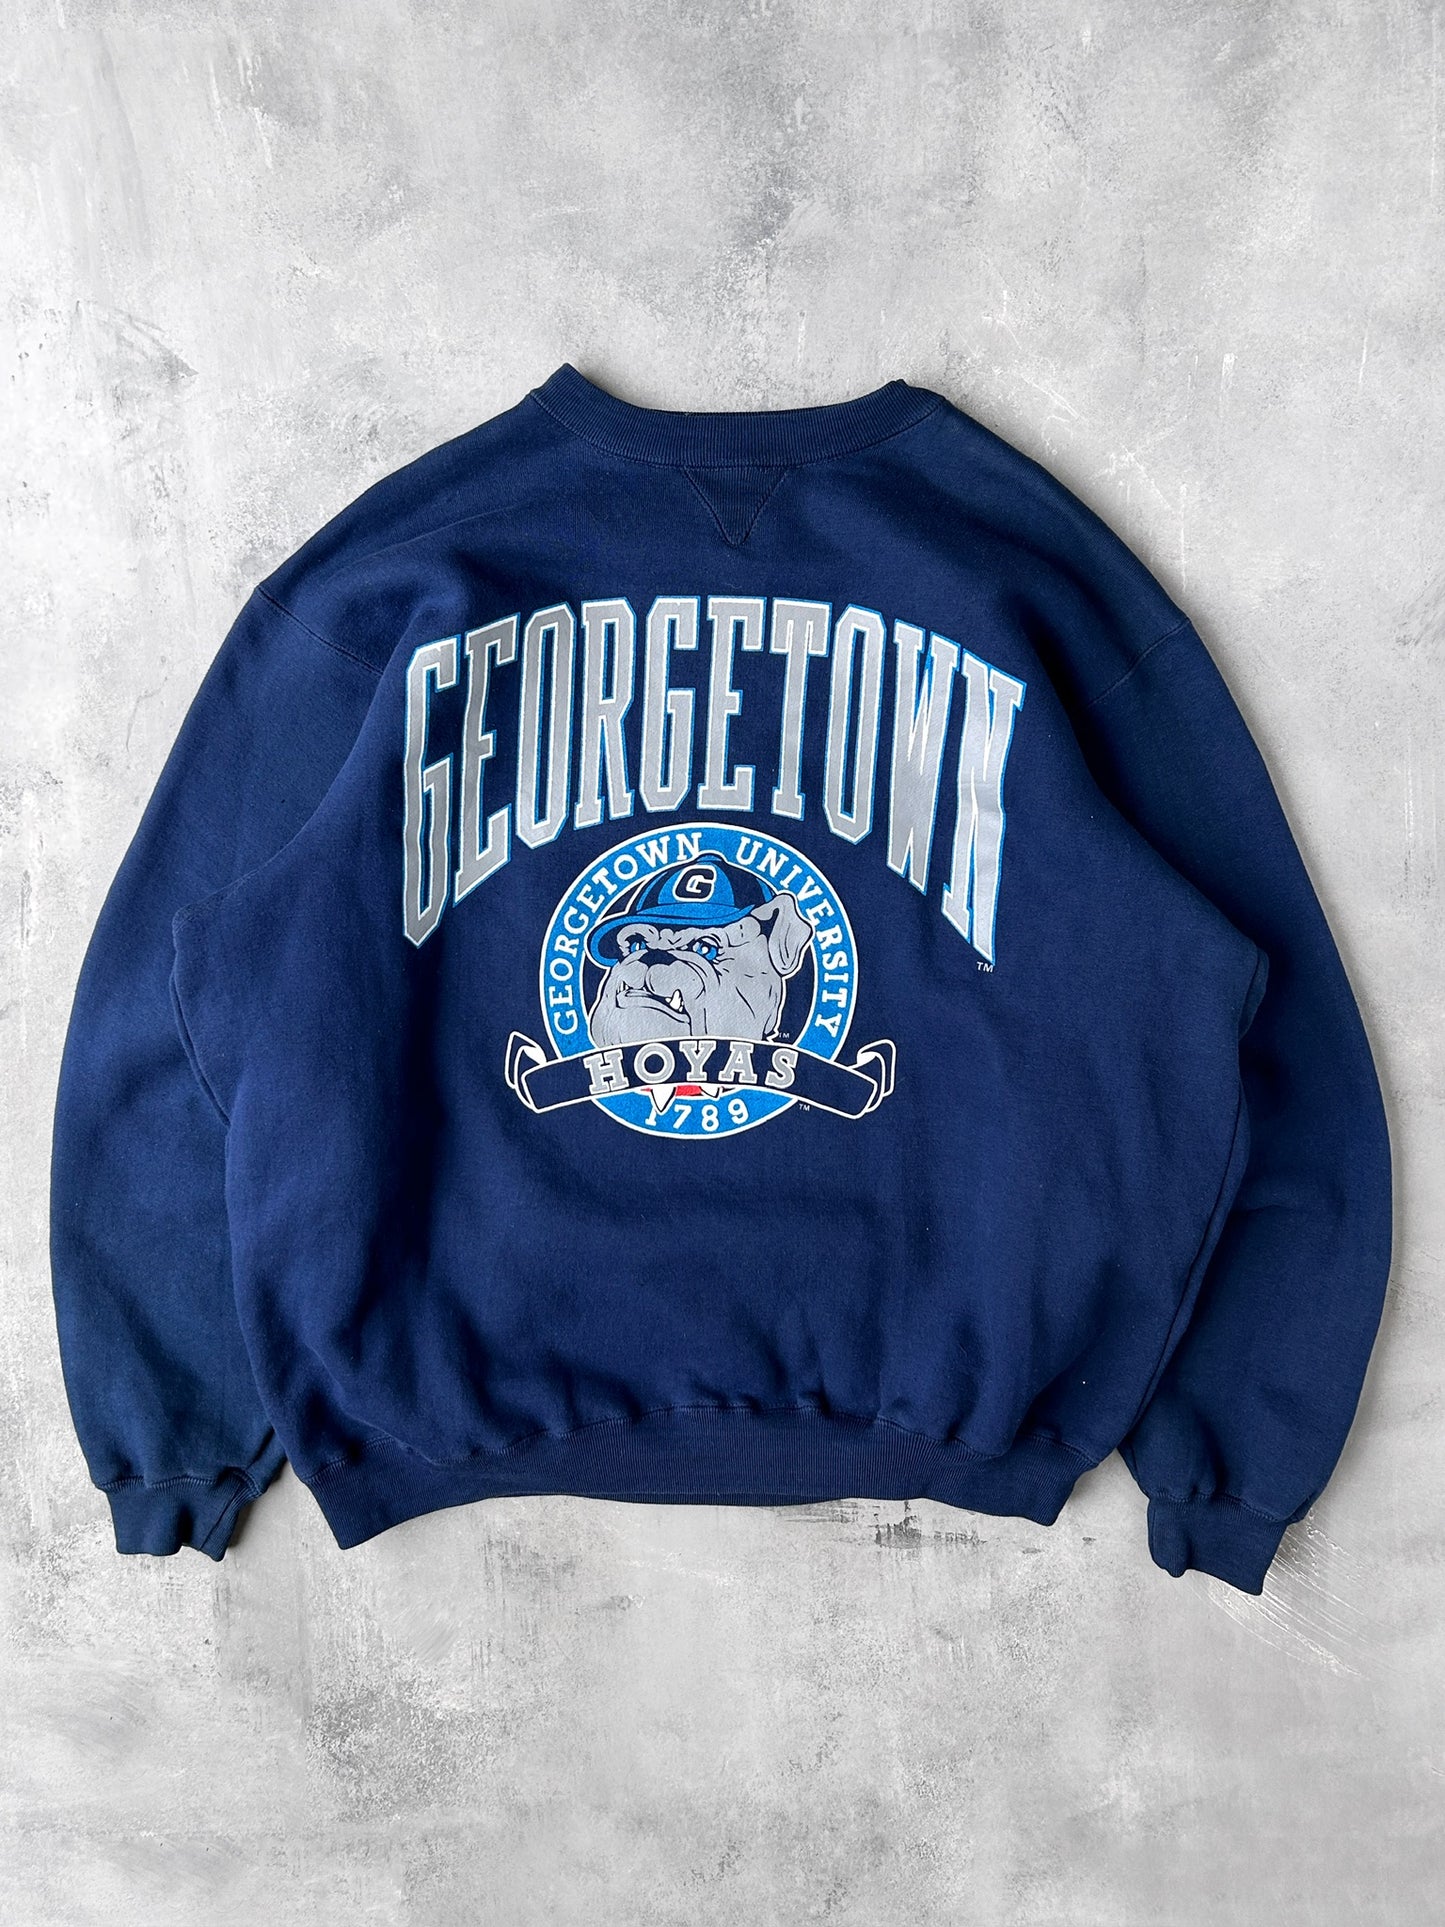 Georgetown University Sweatshirt 90's - XXL